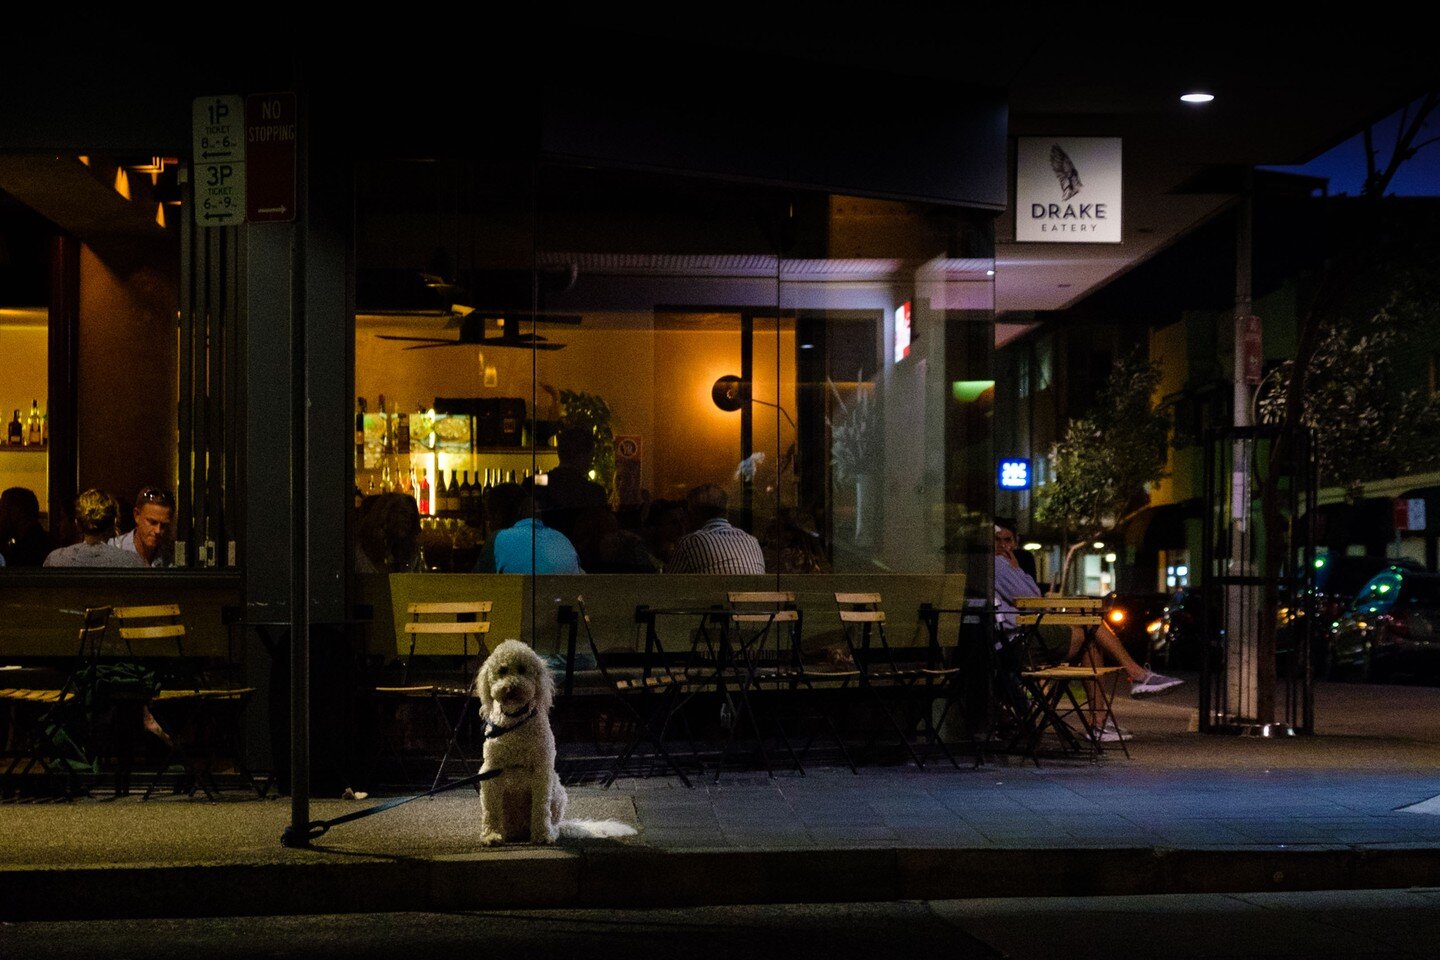 'Waiting'
Shot in Bondi (Sydney, Australia)

@opticnervecollective #OpticNervePets #bondi #pets #dog #streetphotography #pet #Bondibeach #sydney #australia #nightphotography @drakebondi @bondibeach @aquabumps